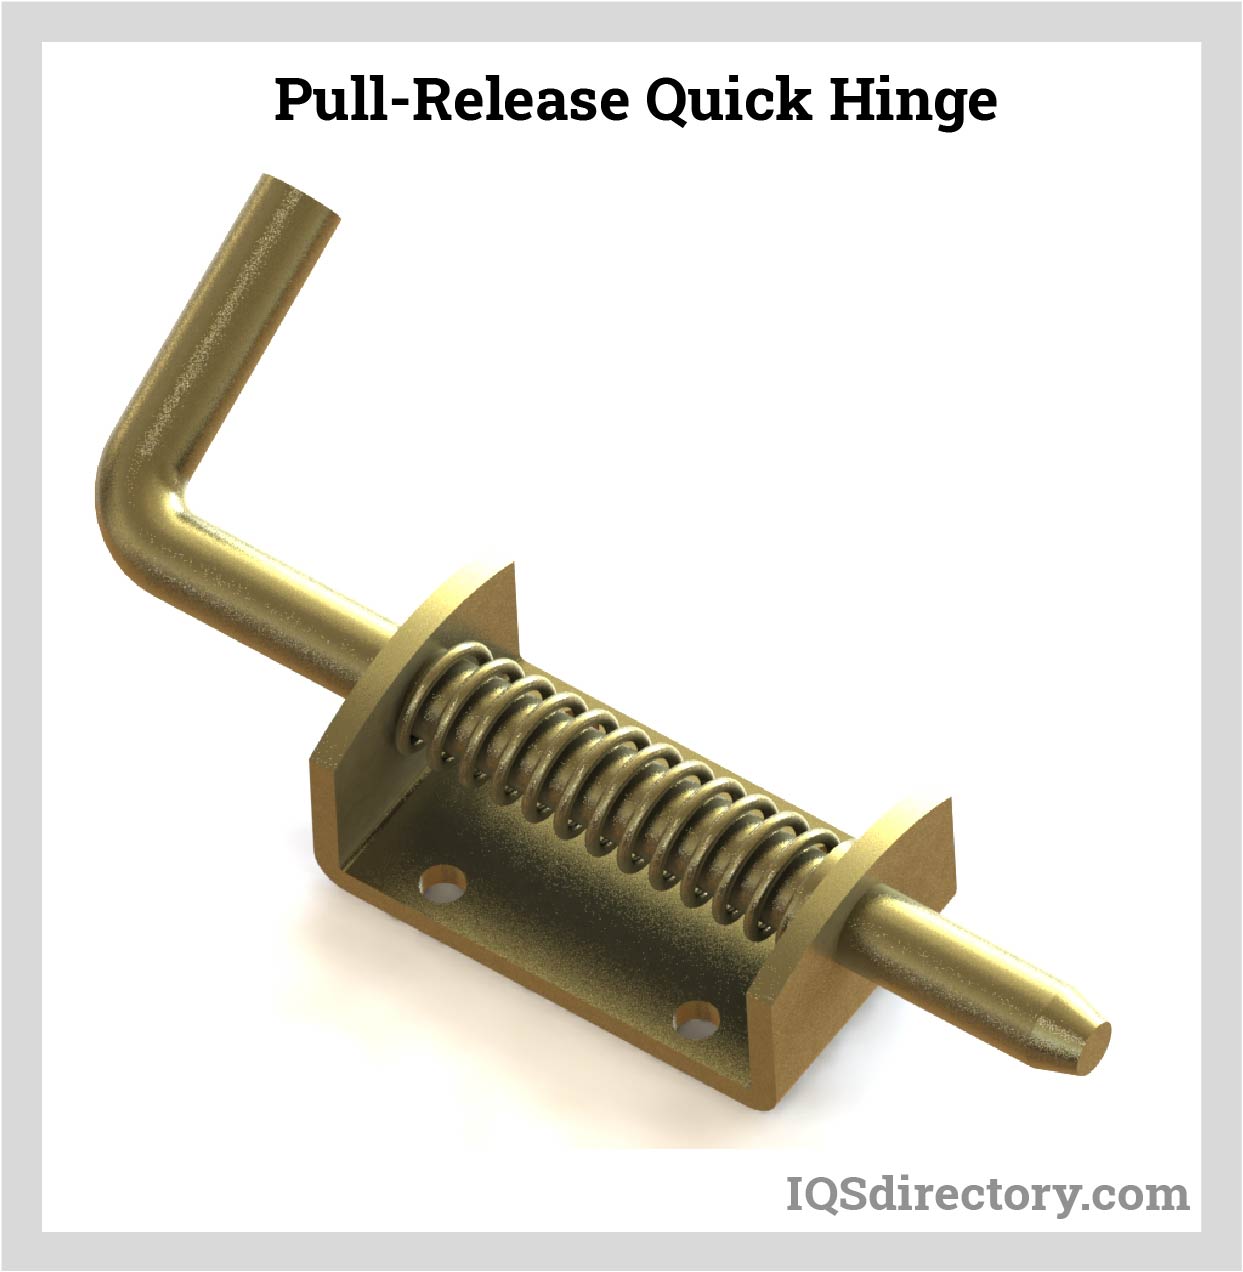 Pull-Release Quick Hinge